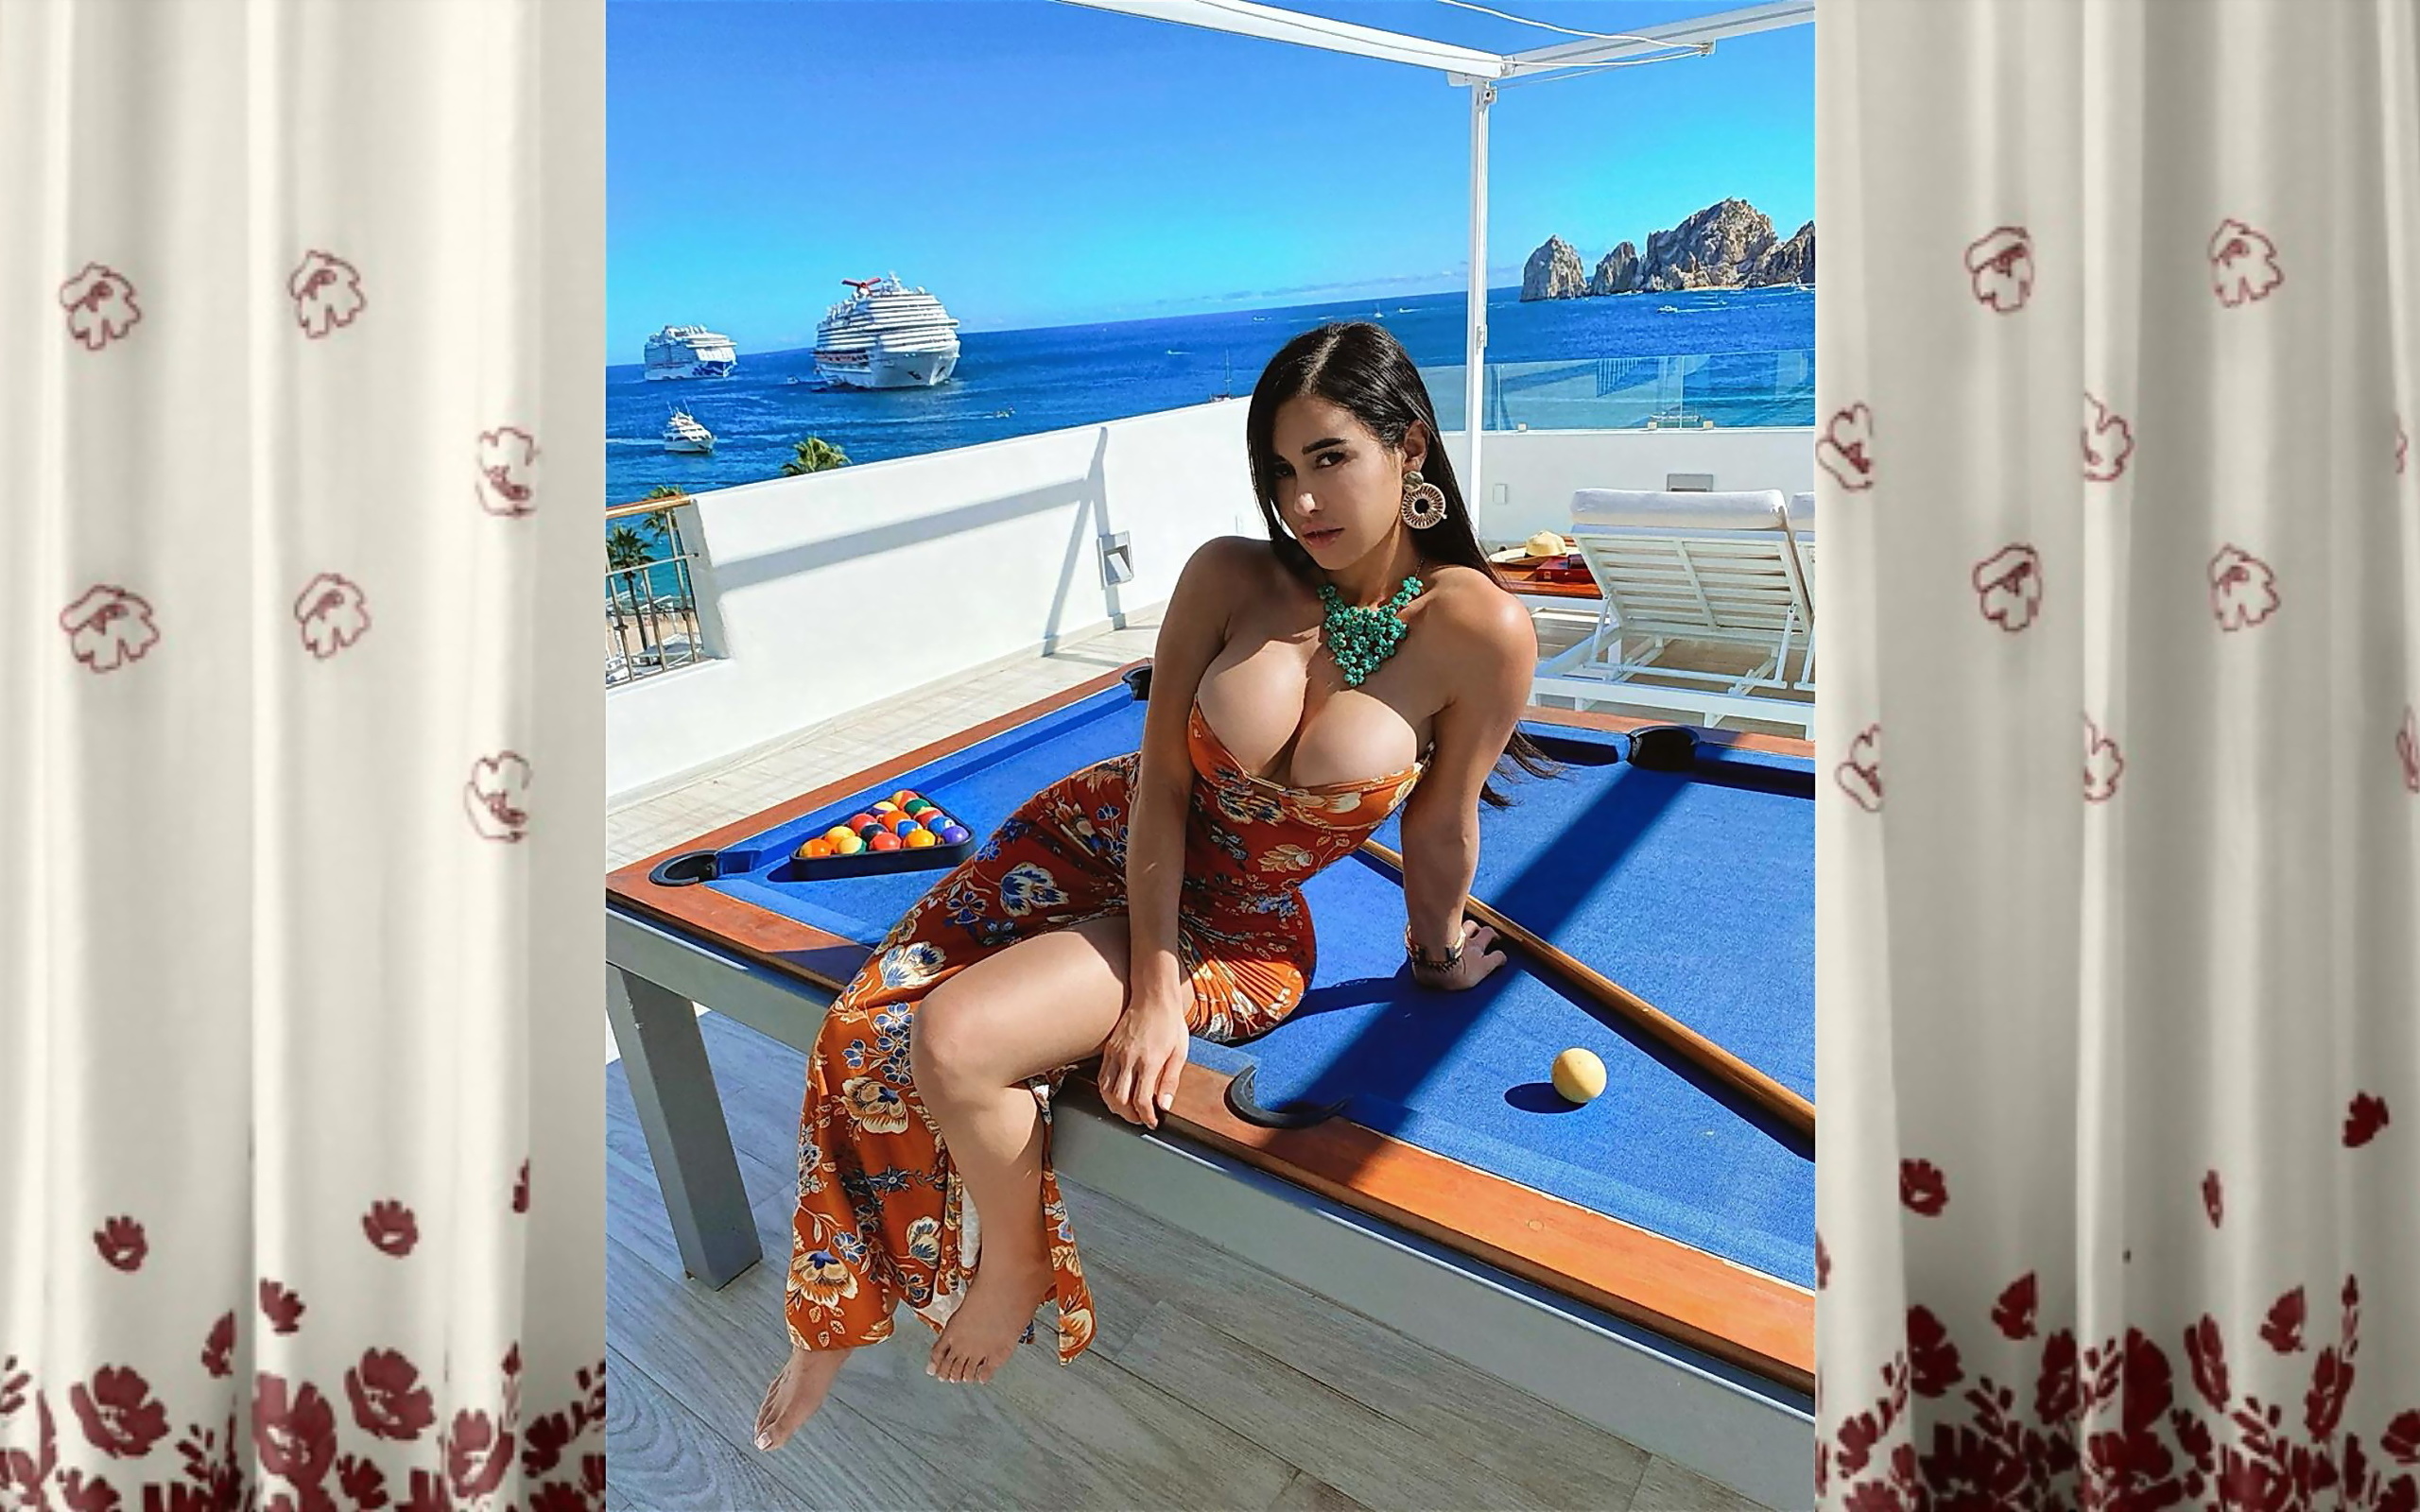 Картинки joselyn cano, девушка, модель, бассейн - обои 2560x1600, картинка ...